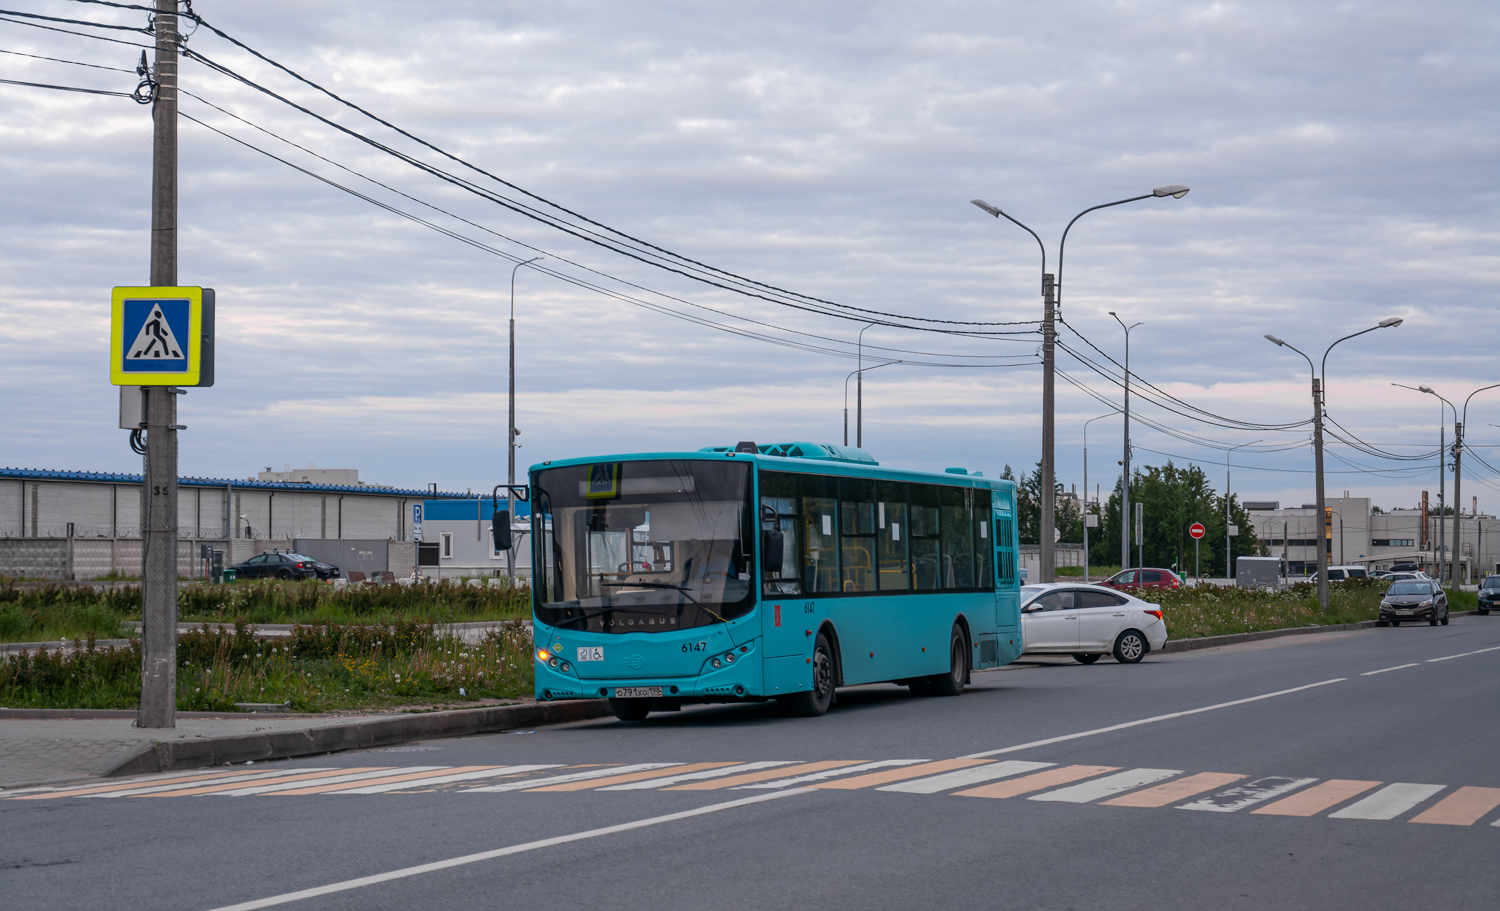 Petersburg, Volgabus-5270.G2 (LNG) # 6147